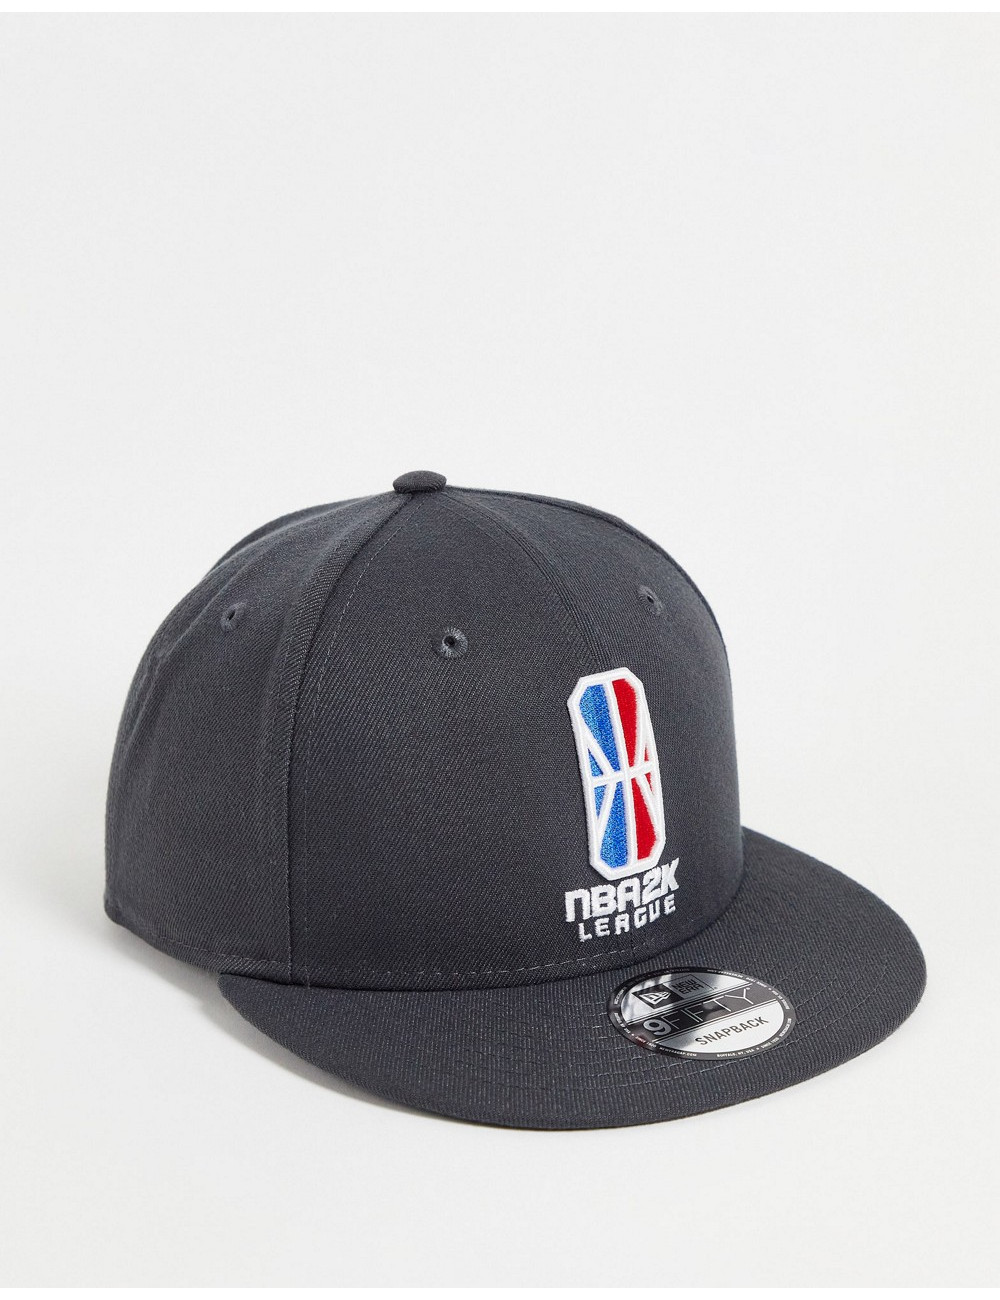 New Era NBA cap in black